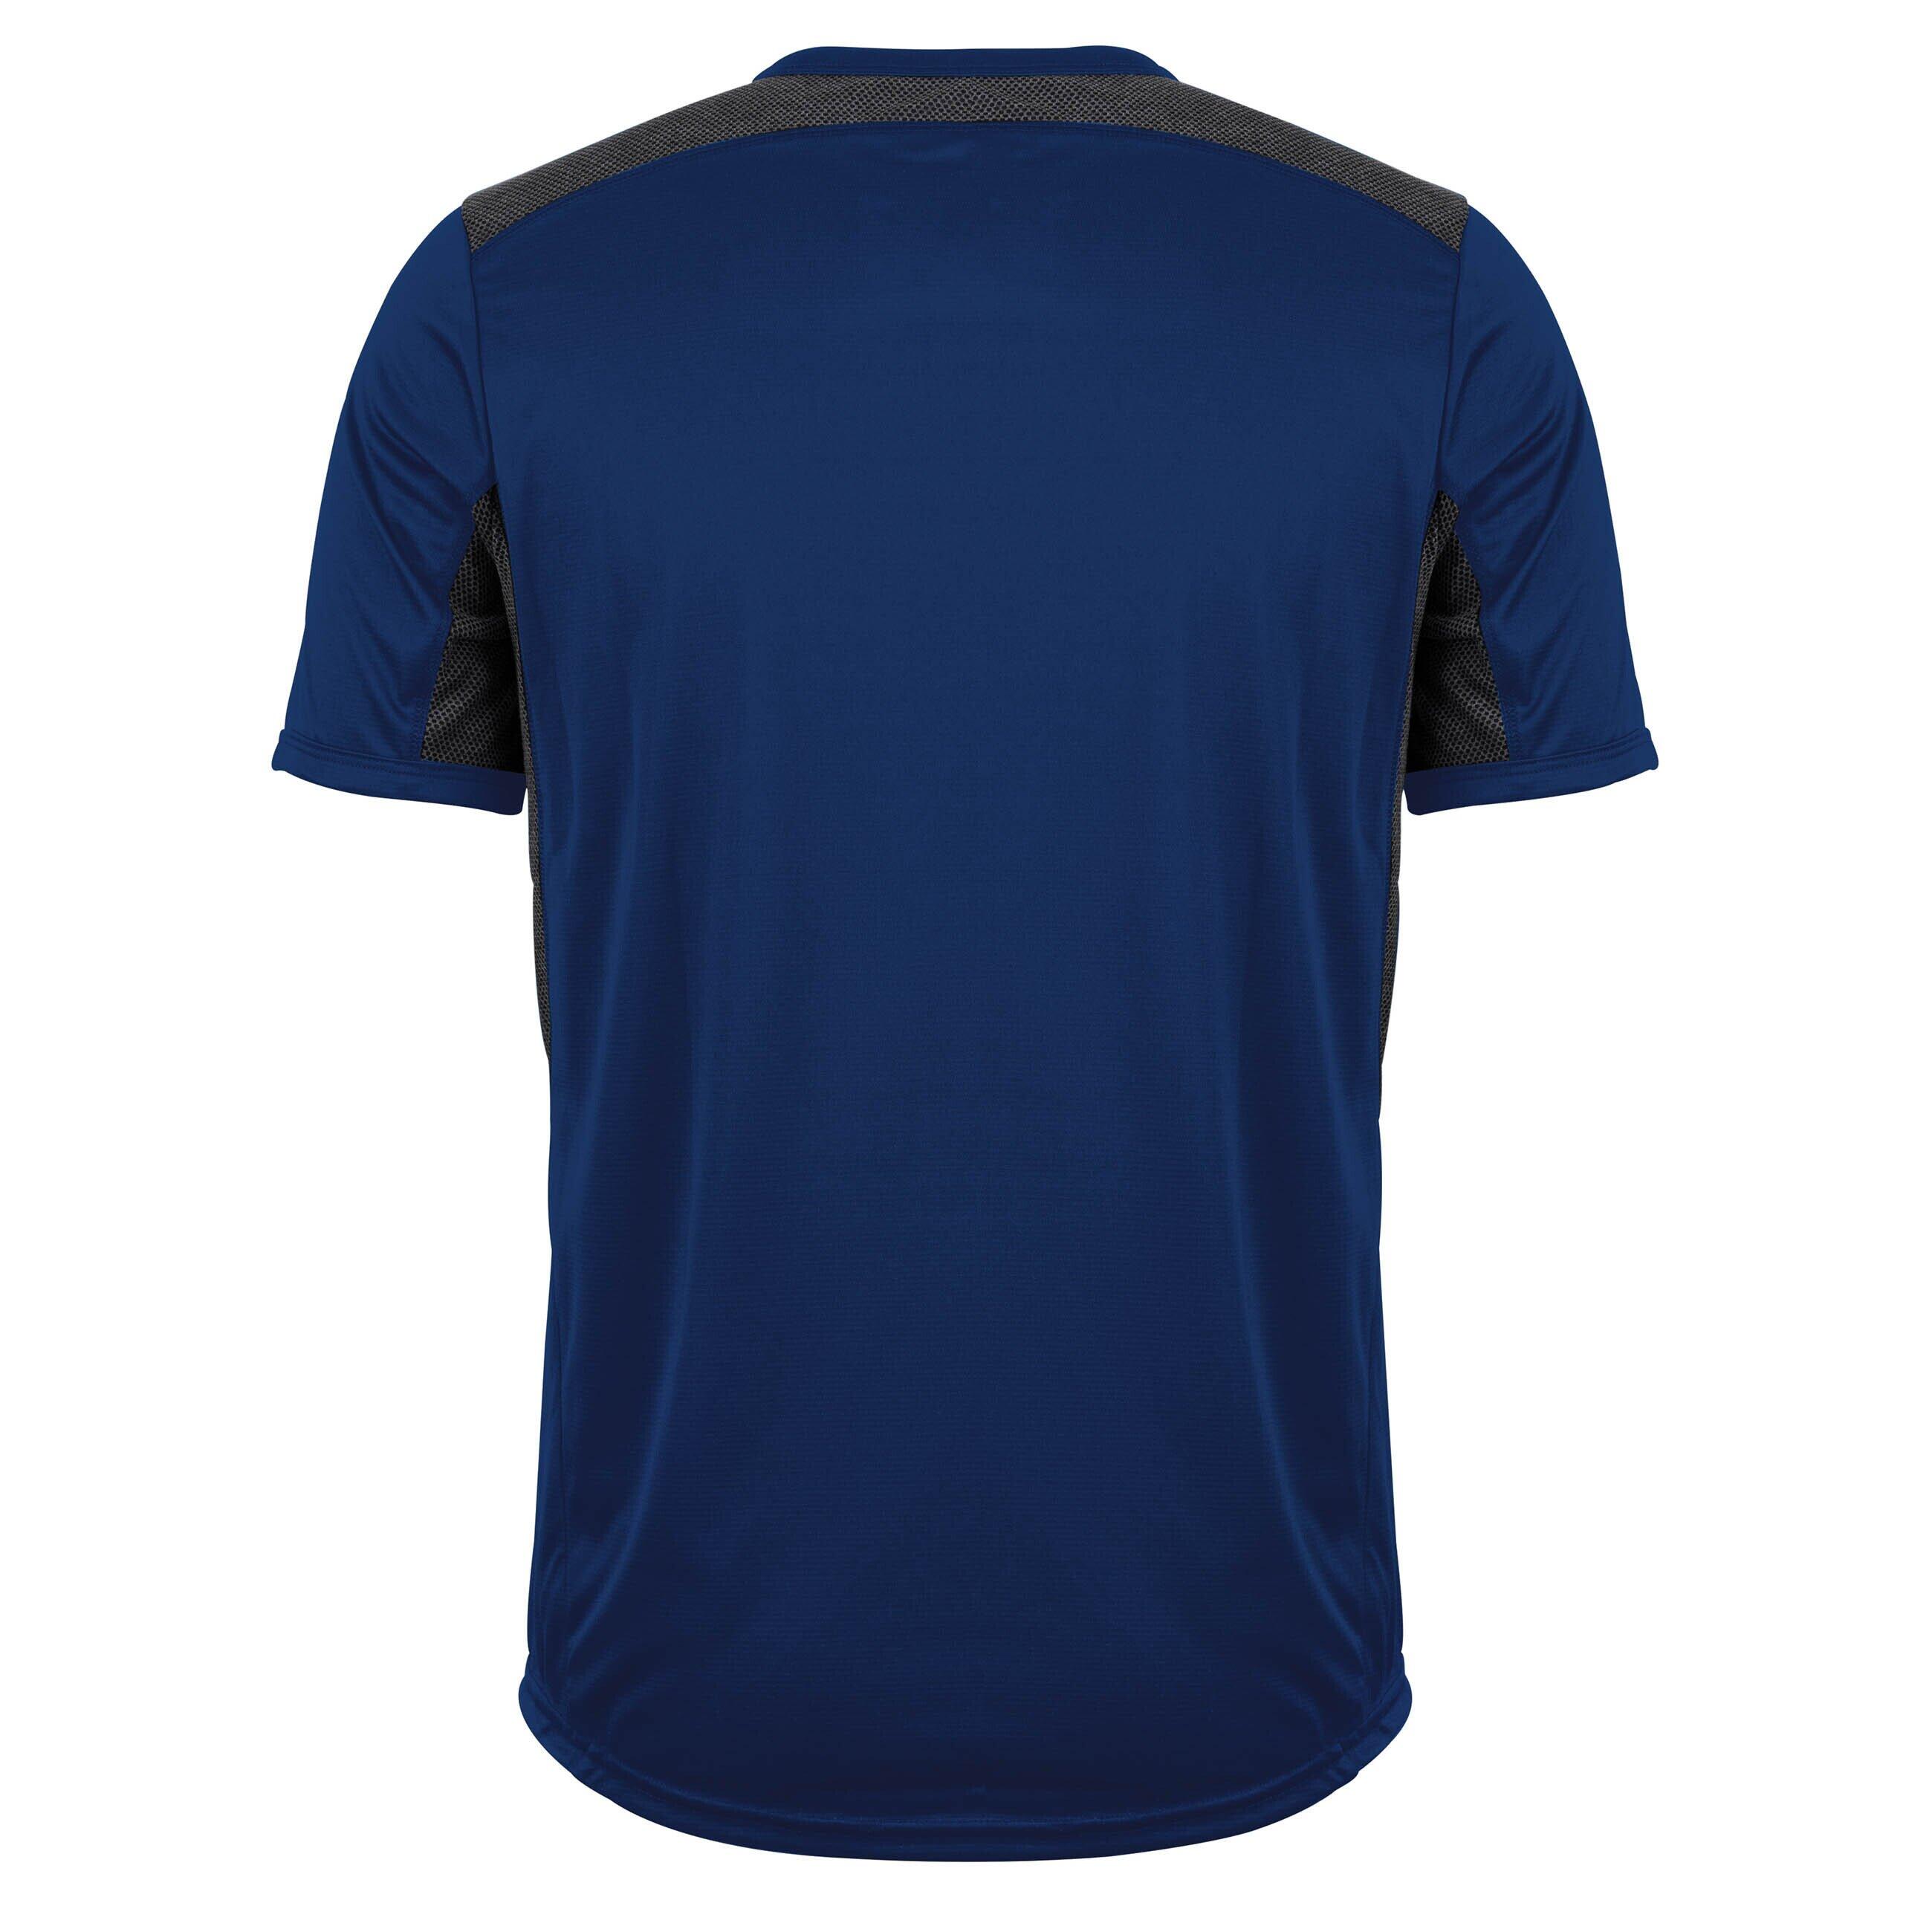 GRAY-NICOLLS Pro Performance Short Sleeve Men's T-Shirt,  Navy